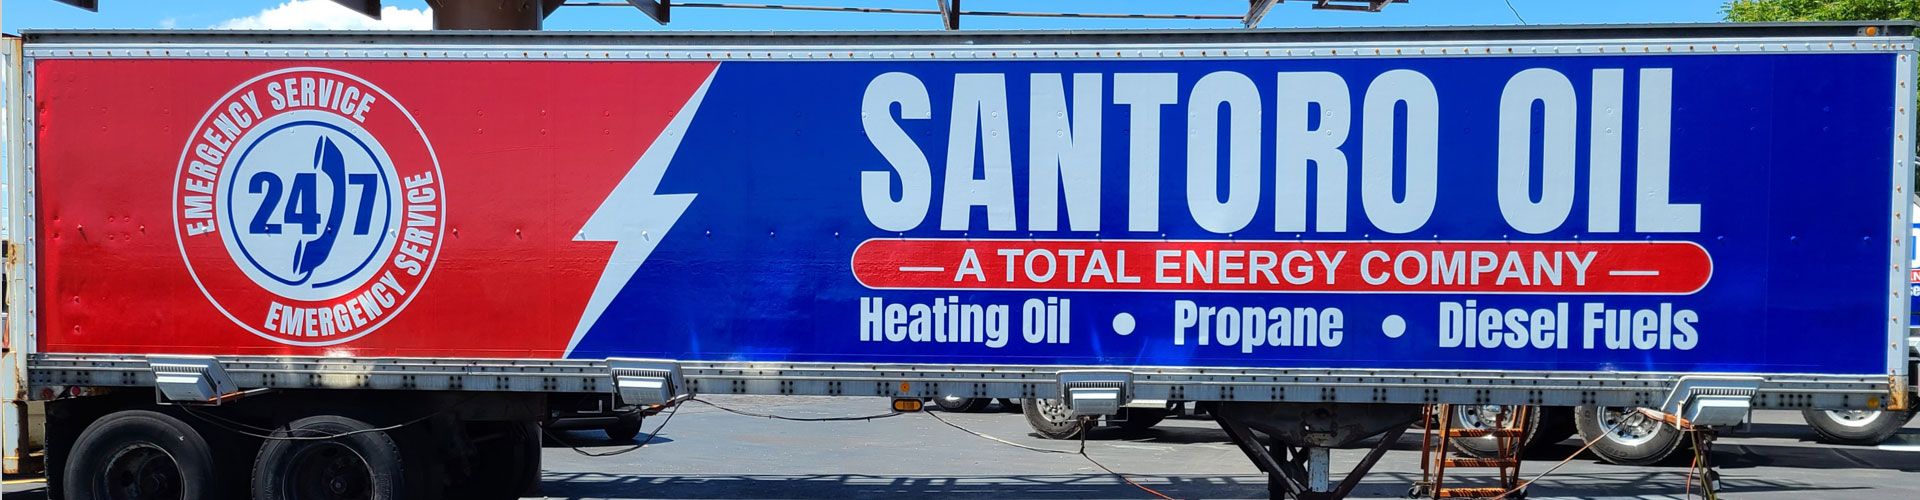 Santoro Oil billboard on Interstate 95 in Providence, RI